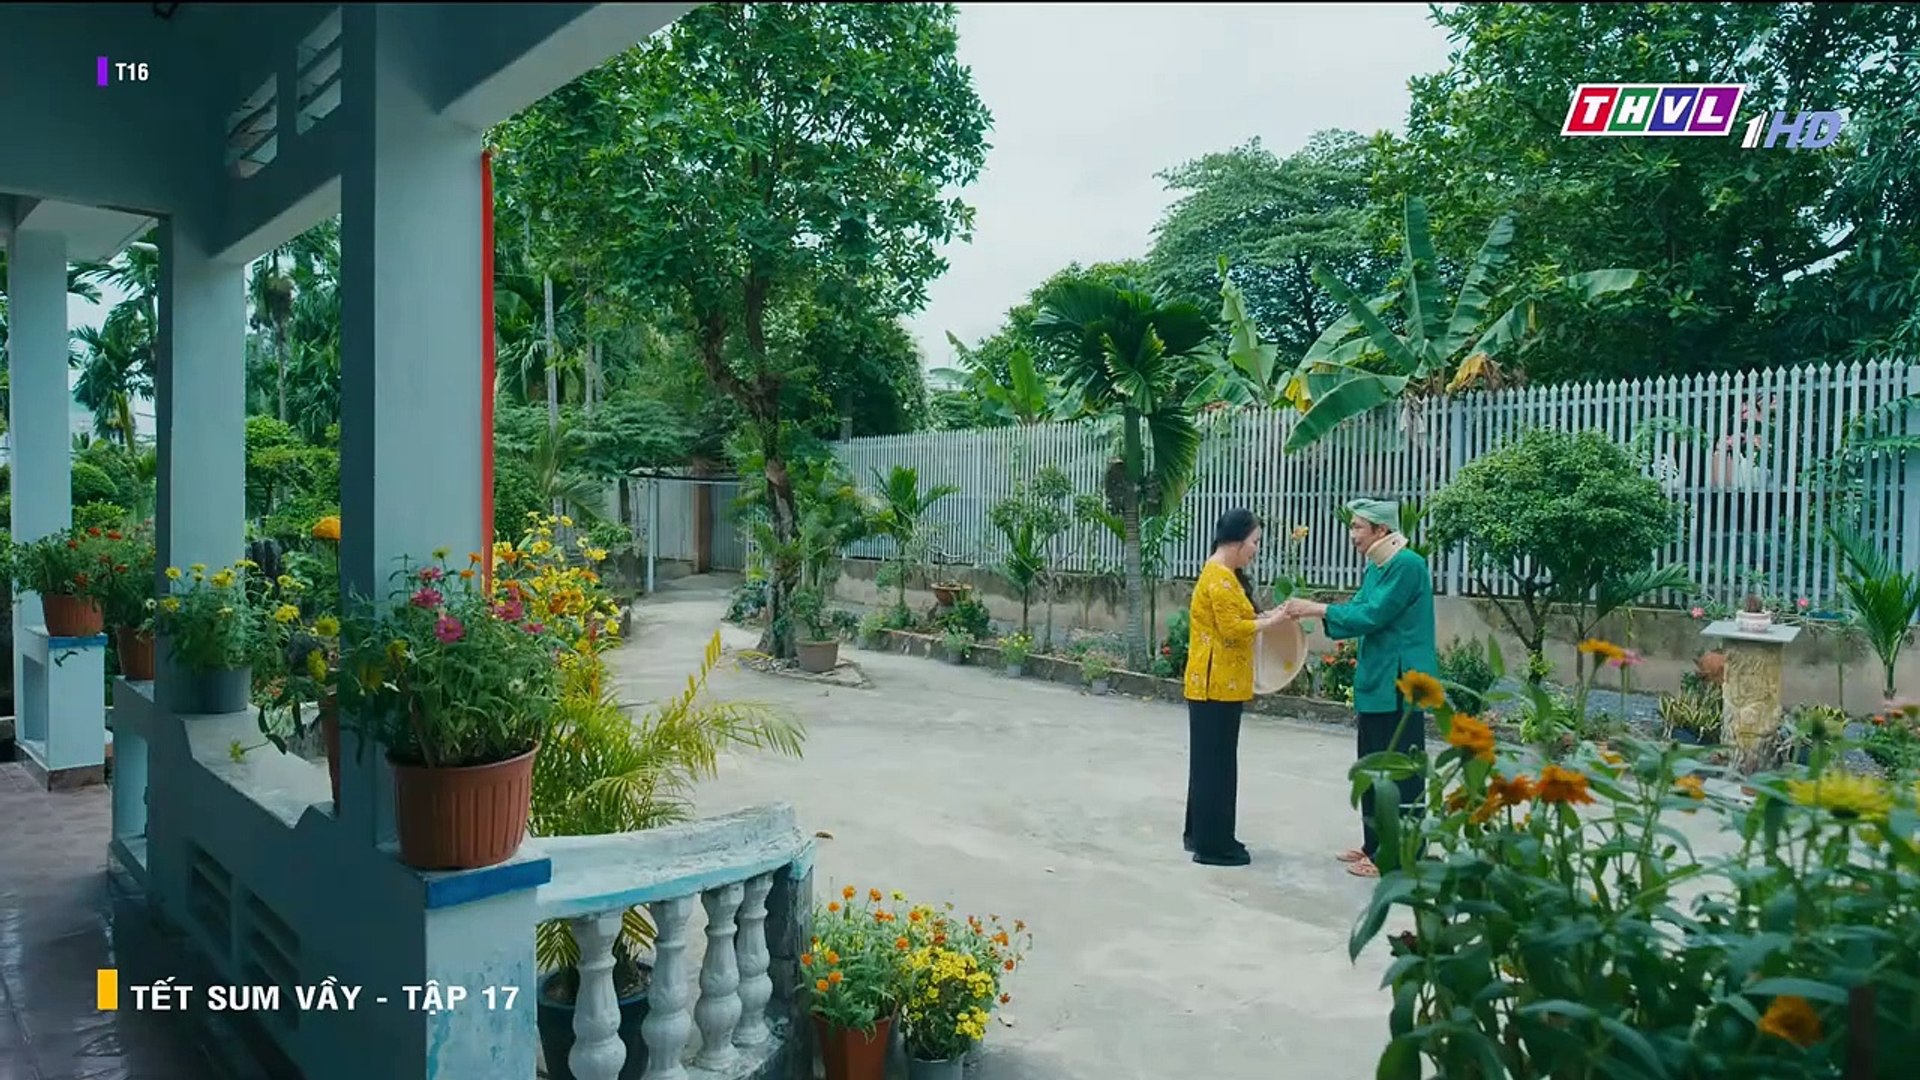 Tết Sum Vầy - Tập 17 - Phim Việt Nam THVL1 - Xem Phim Tet Sum Vay Tap 18